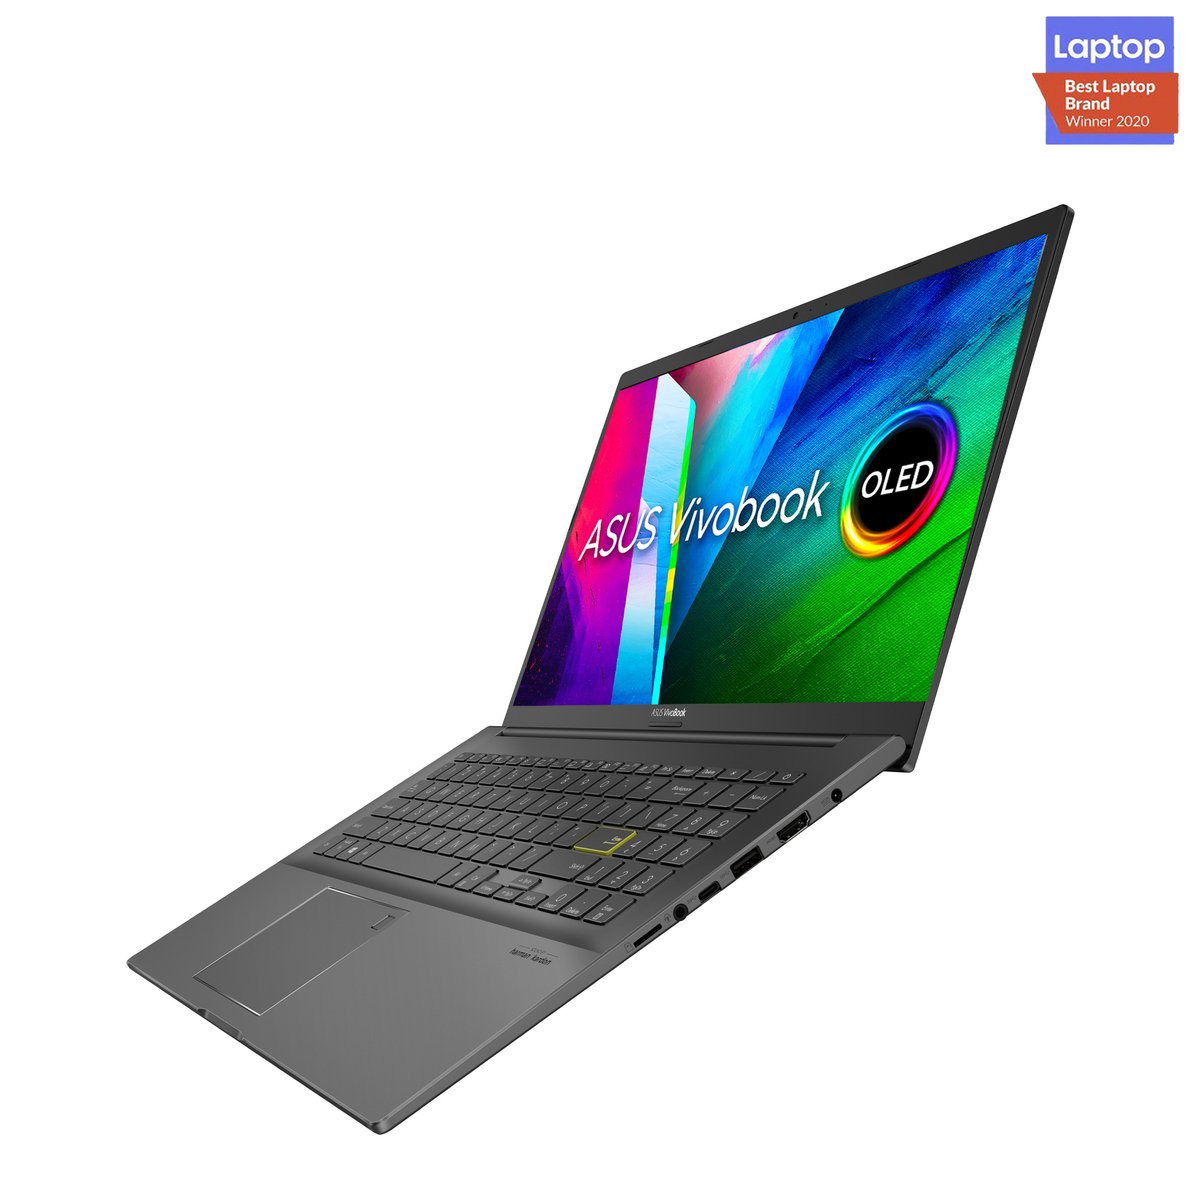 ASUS Vivobook K513EQ-OLED1B5T, Slim Laptop, Core i5-1135G7, 8GB RAM, 512GB PCIE G3 SSD, Nvidia GeForce MX 350 2GB, 15.6 inch FHD (1920X1080) 16:9 OLED, Windows 10 Home, Black